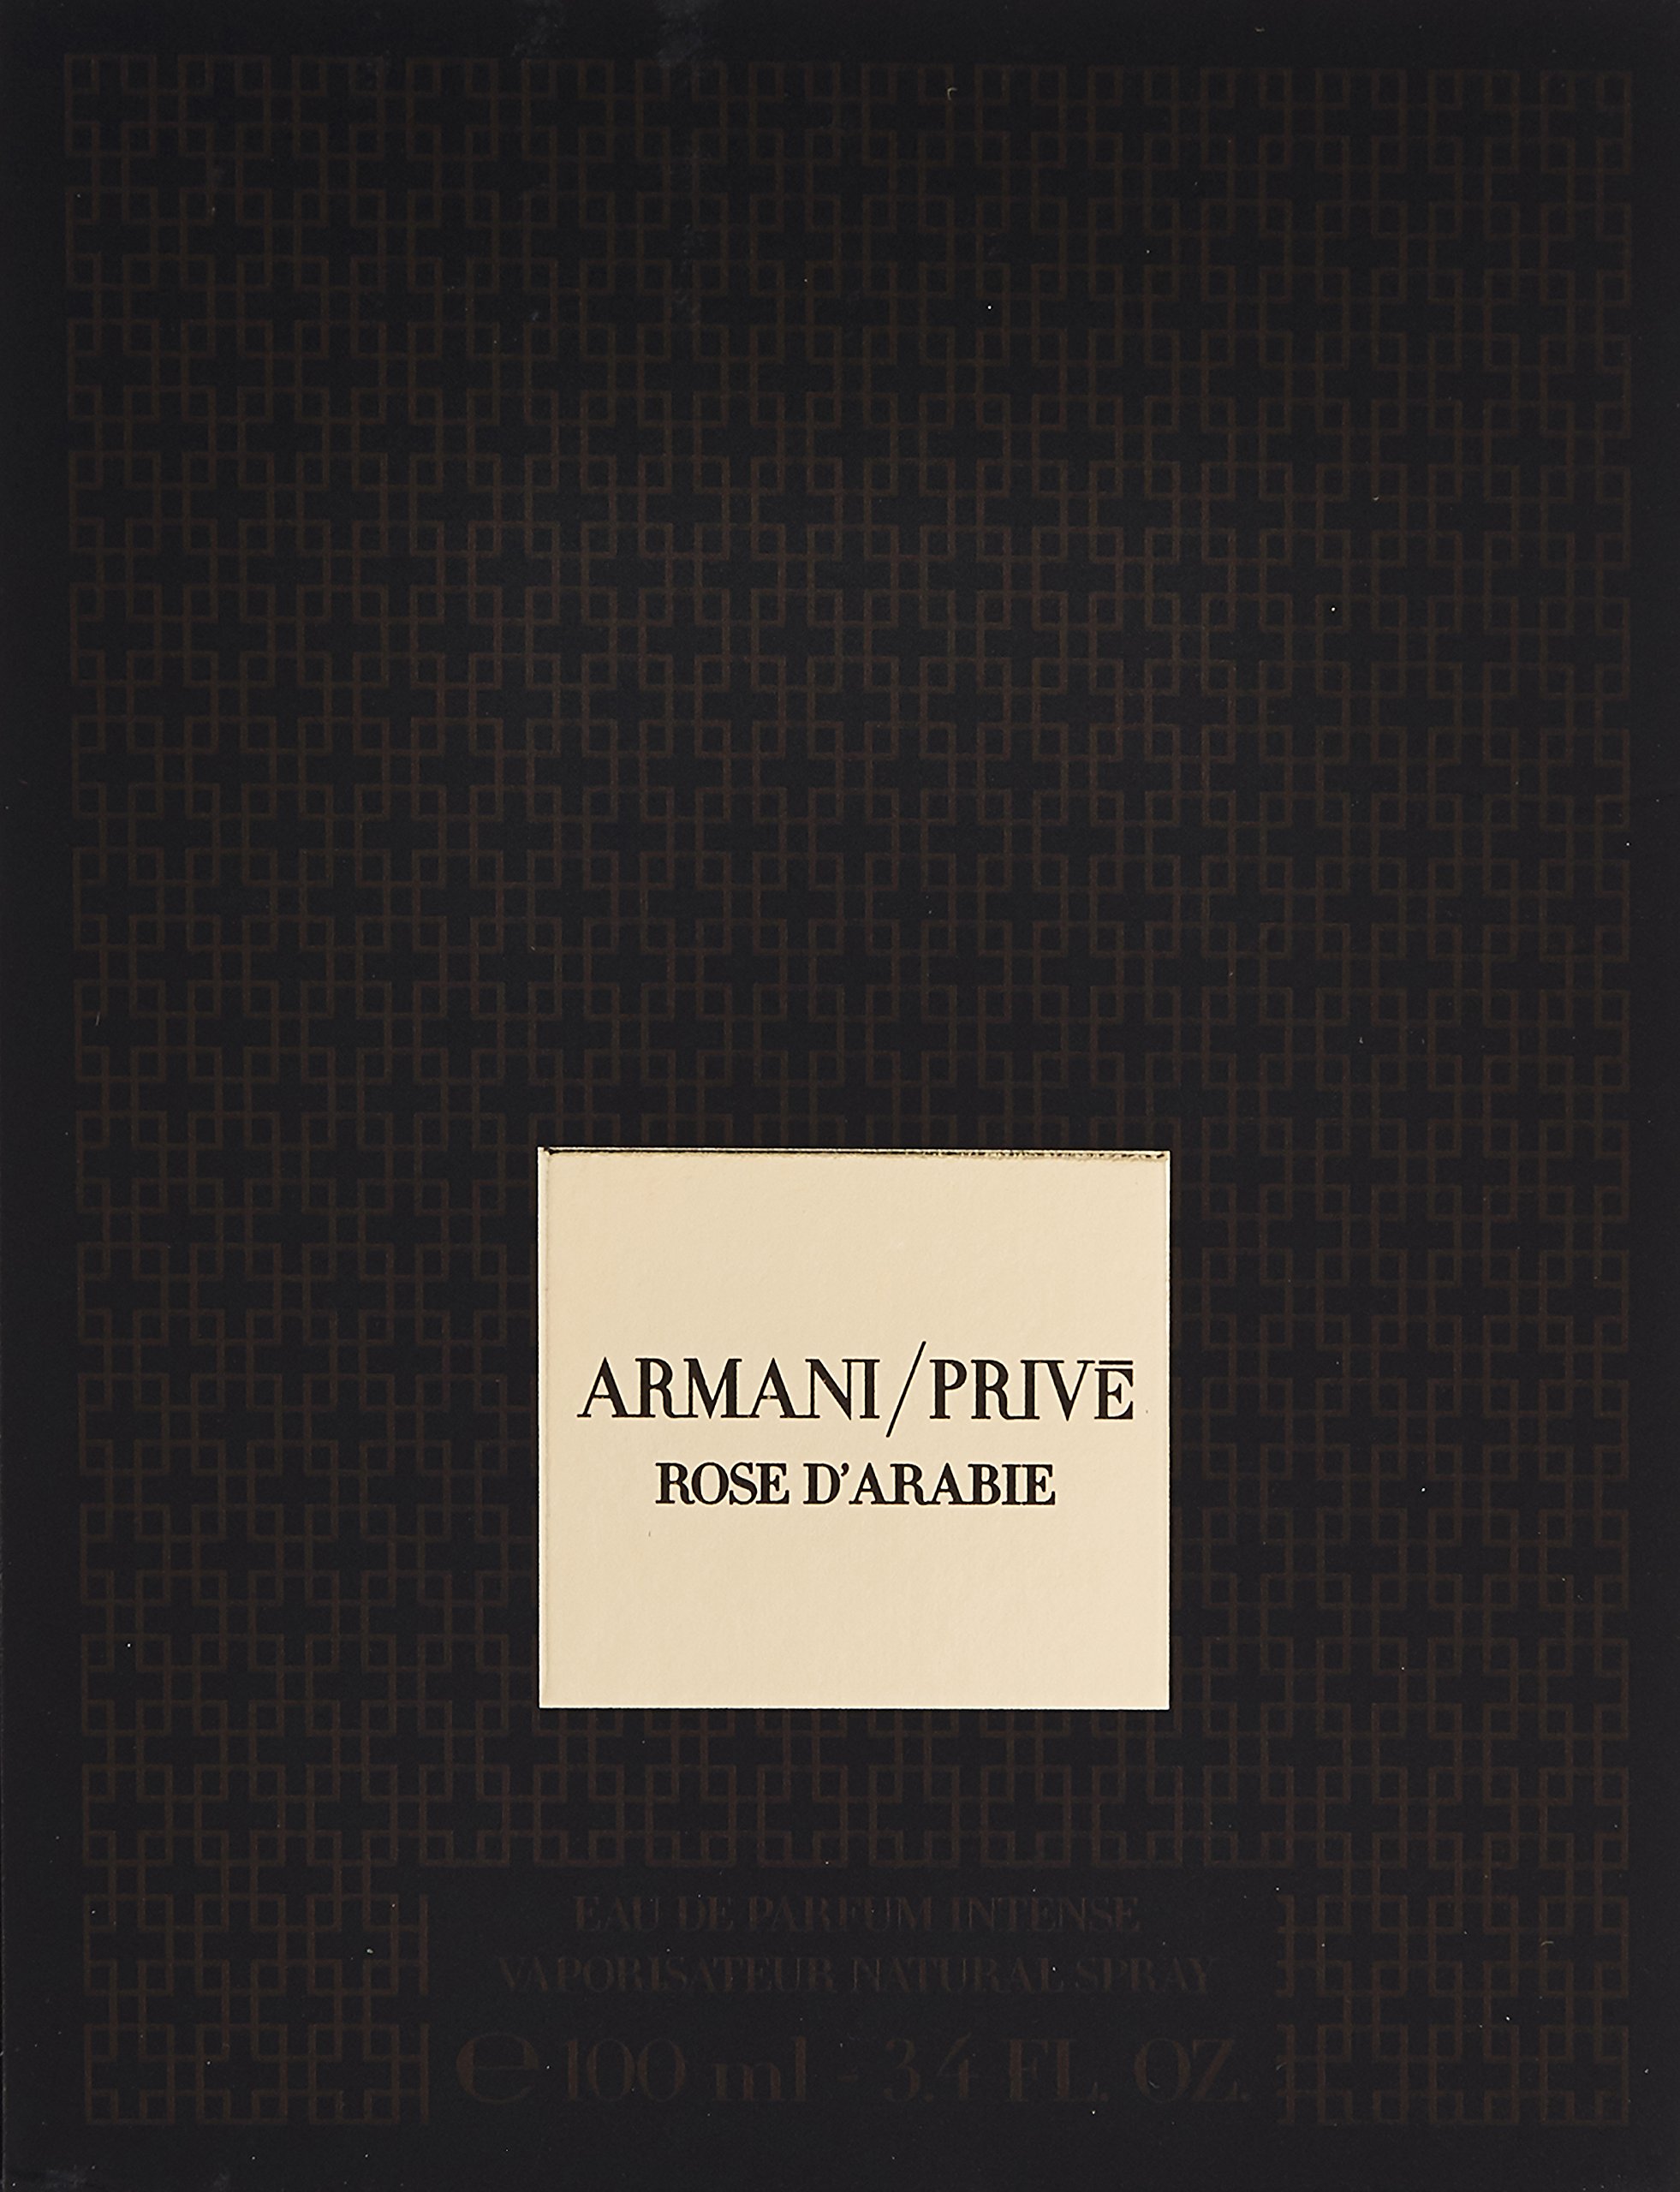 Giorgio Armani Armani/Prive Rose D'arabie Eau de Parfum Spray, 3.4 Ounce